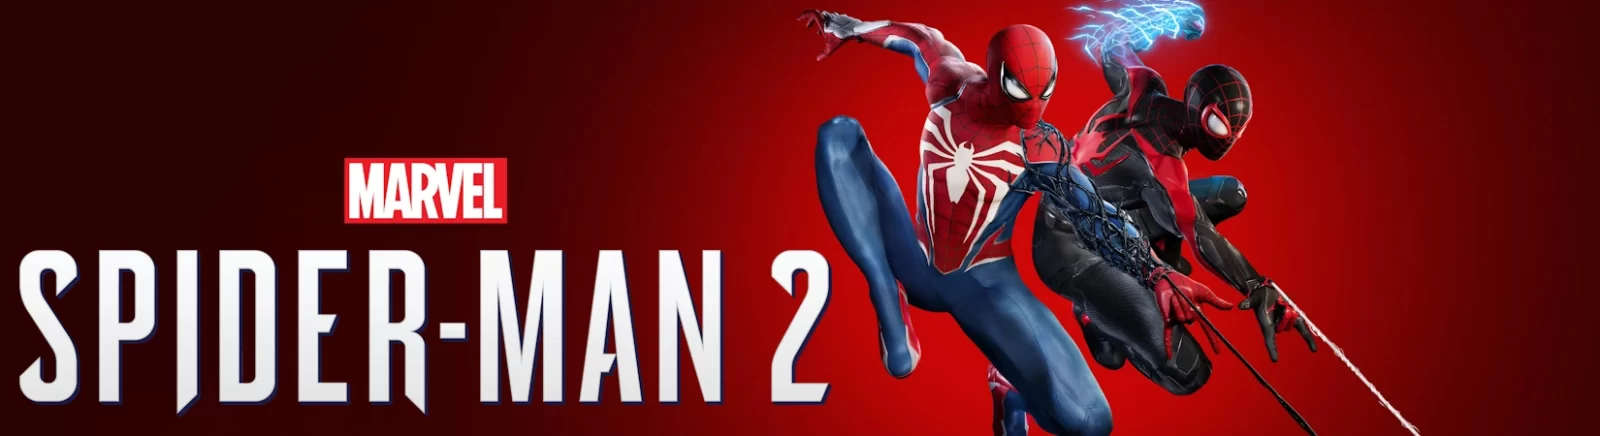 Marvels.Spider-Man-2-GB-Slider